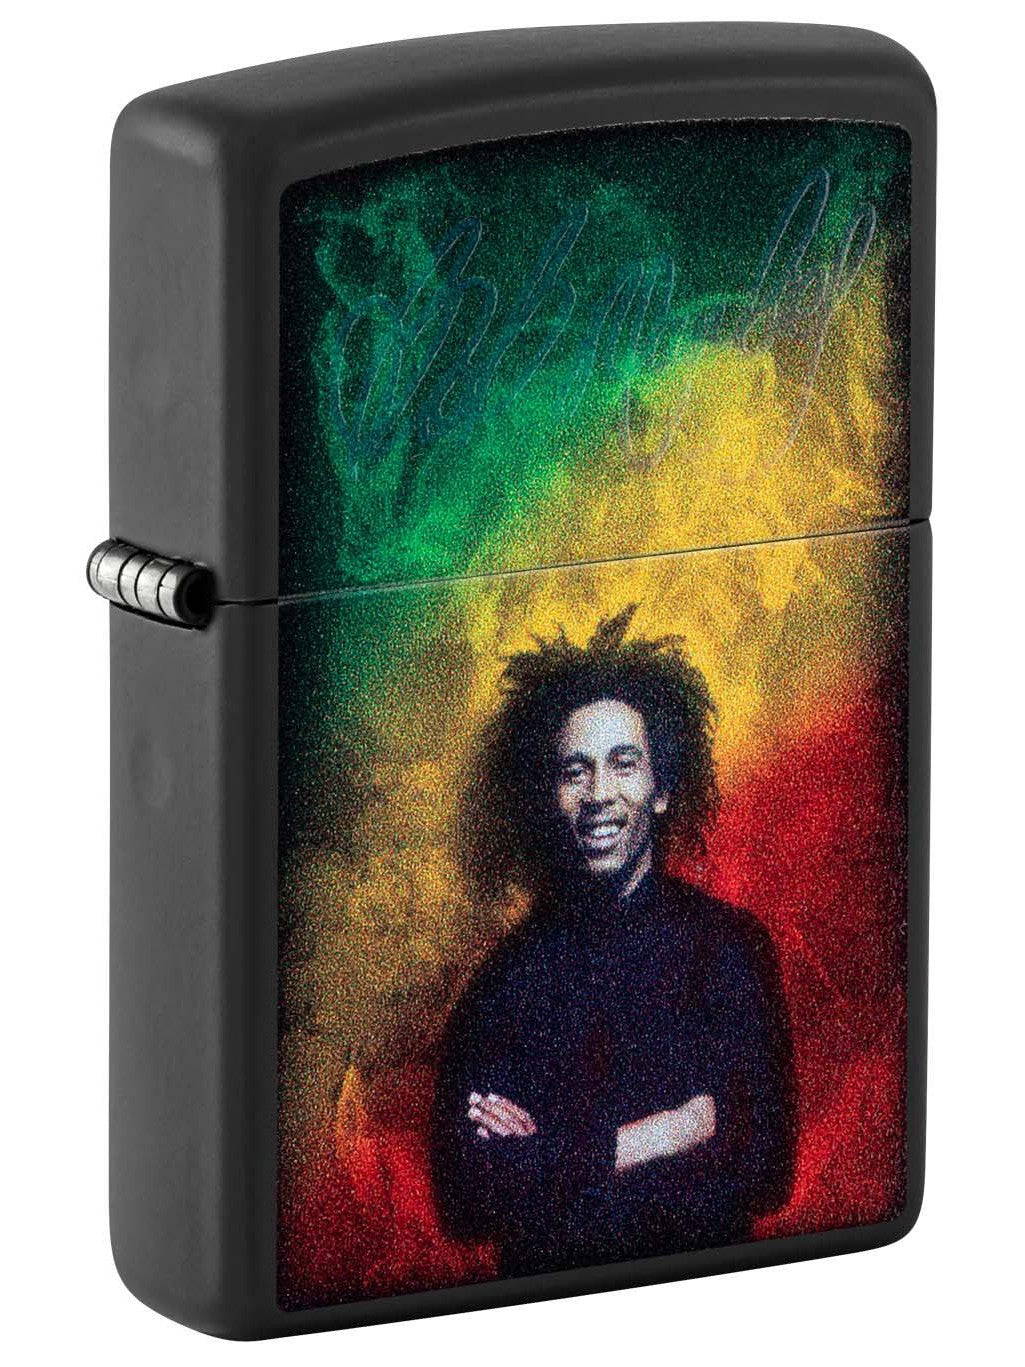 Zippo Lighter: Bob Marley with Black Light Signature - Black Matte 48674